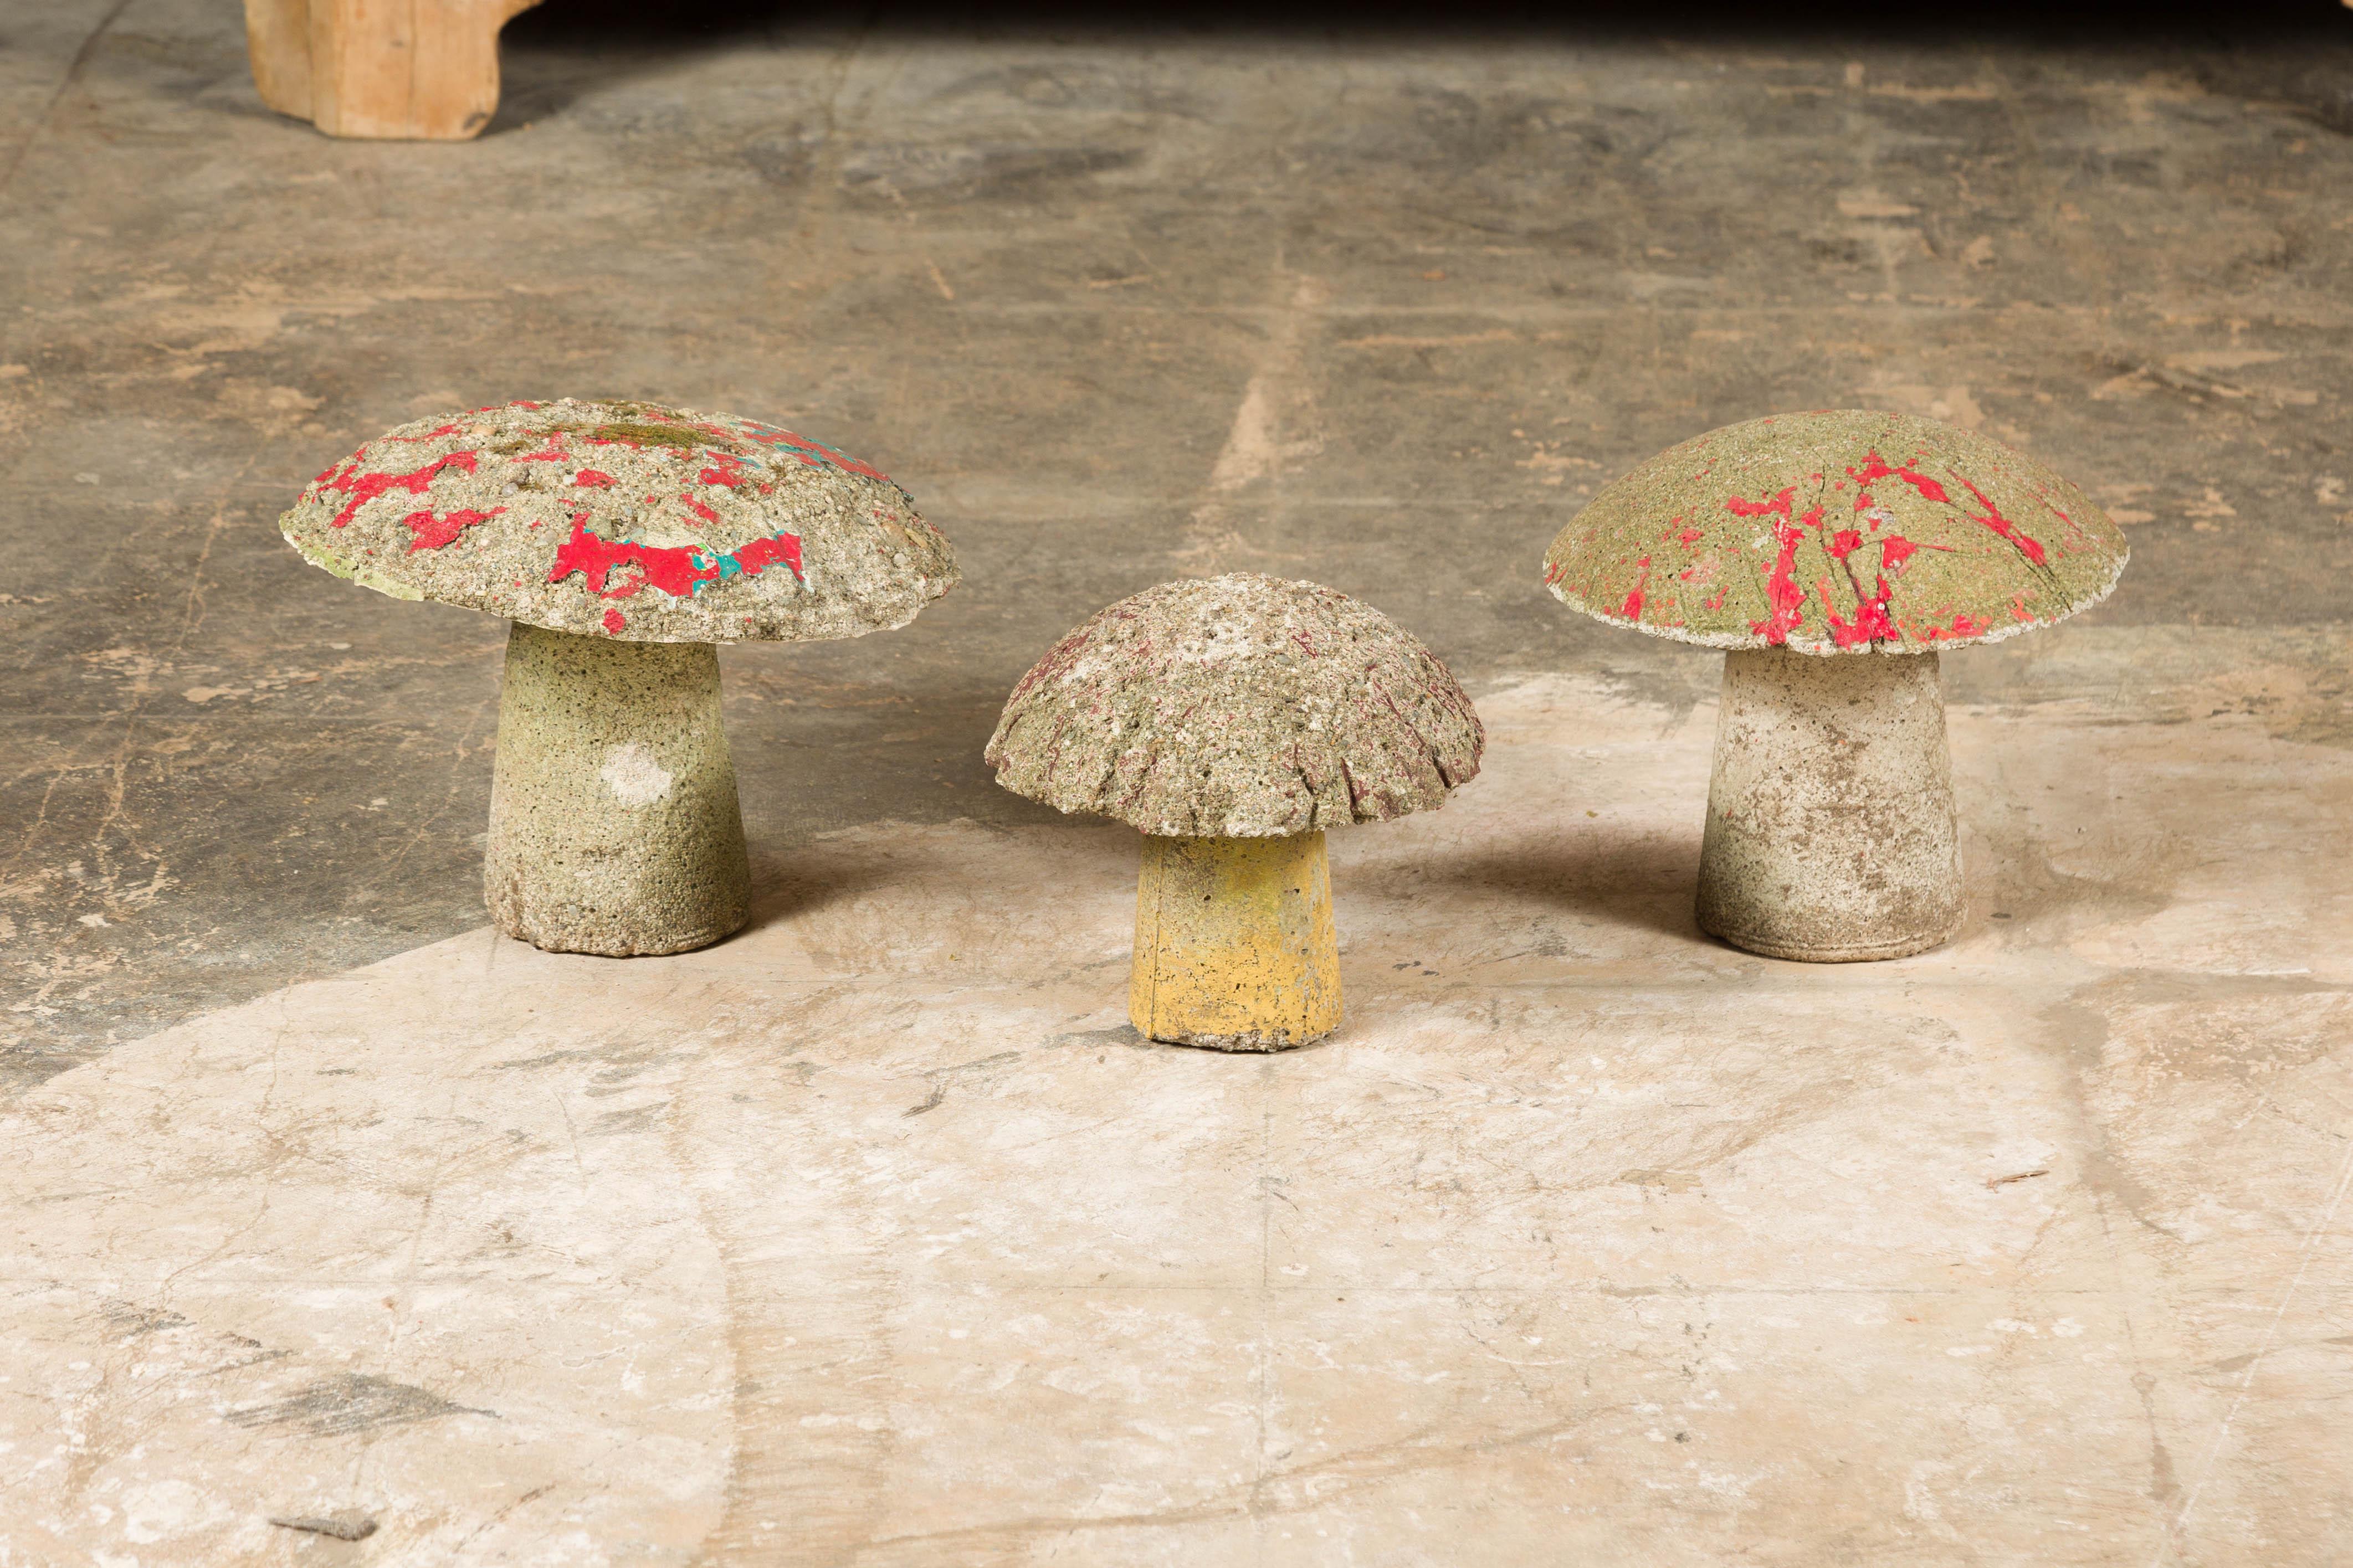 concrete garden mushroom ornaments